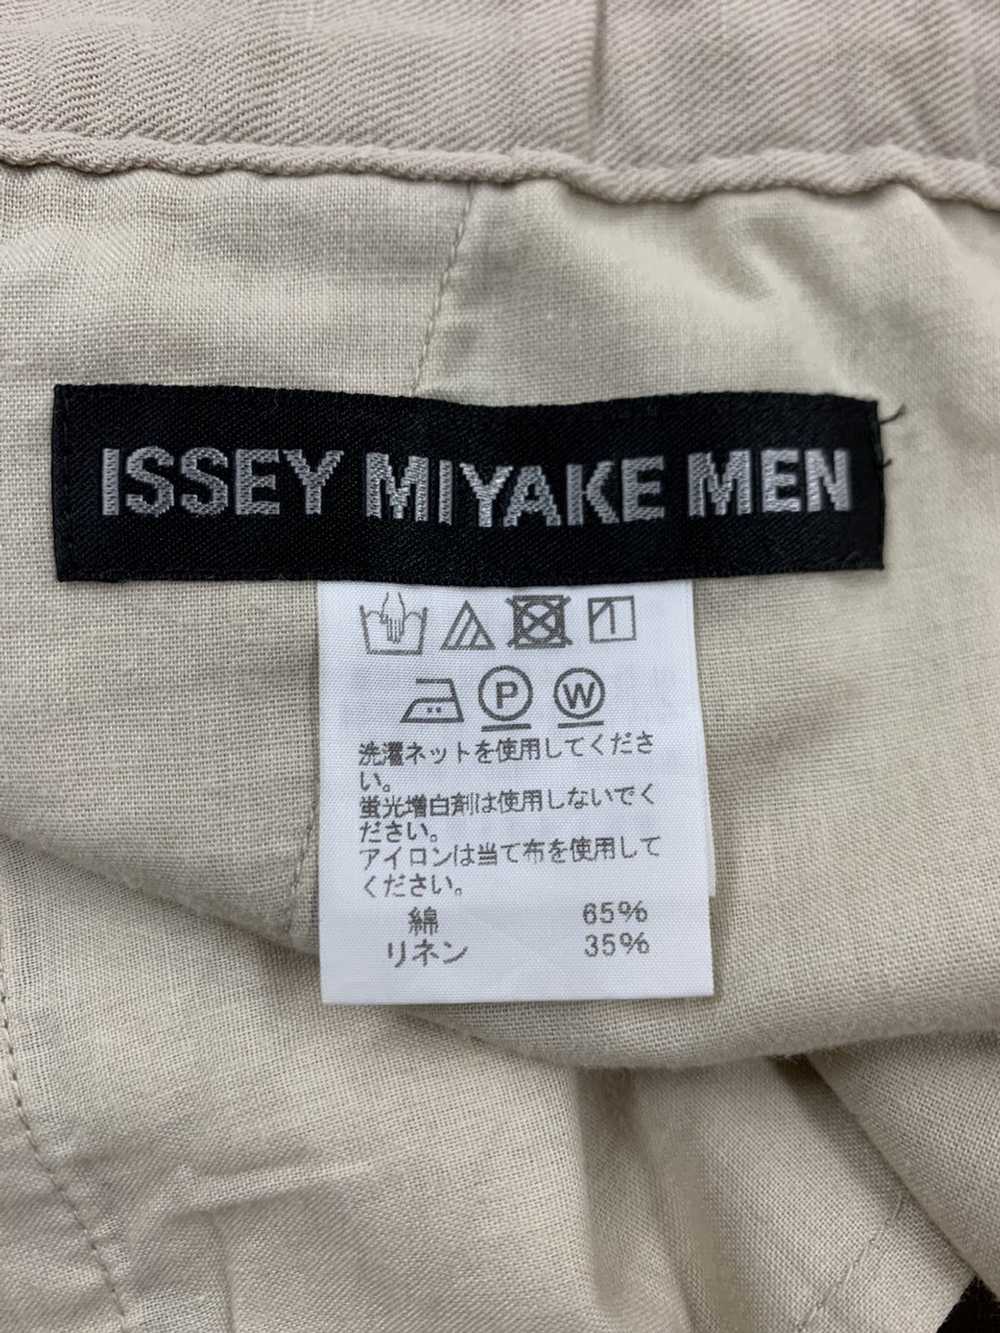 Japanese Brand Issye Miyake Khaki Pants - image 7